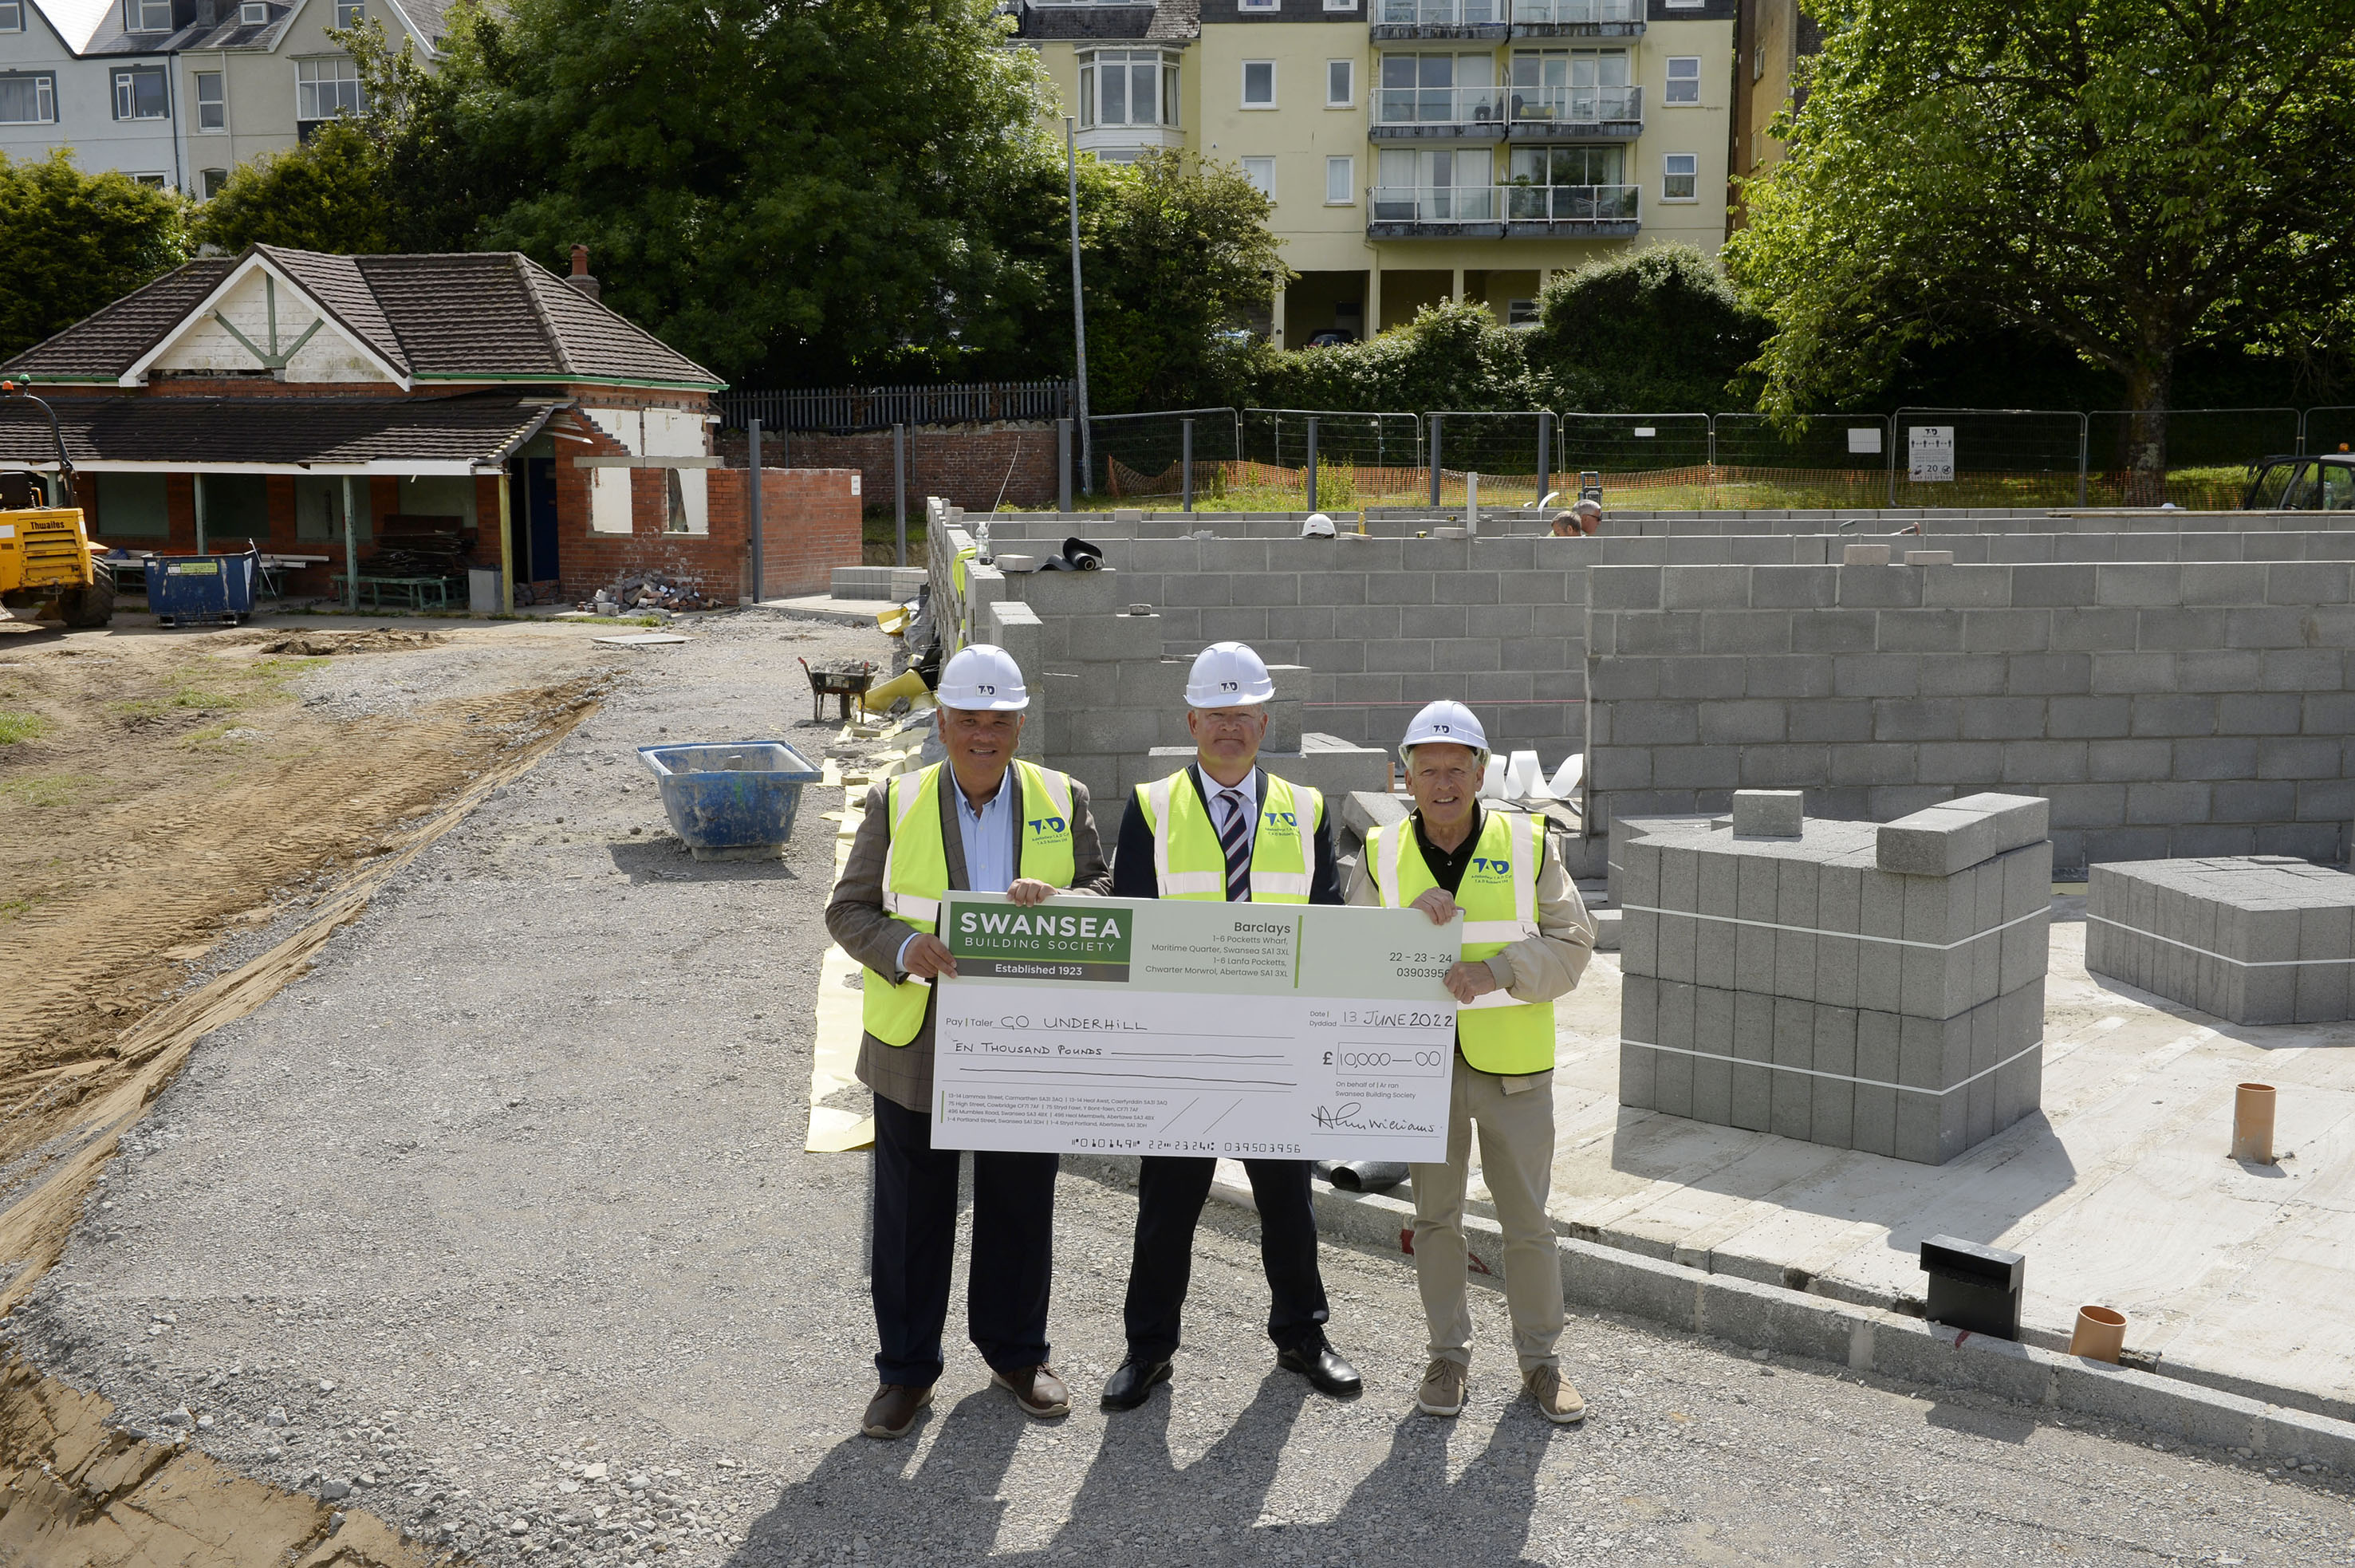 We donate £10K to Go Underhill development